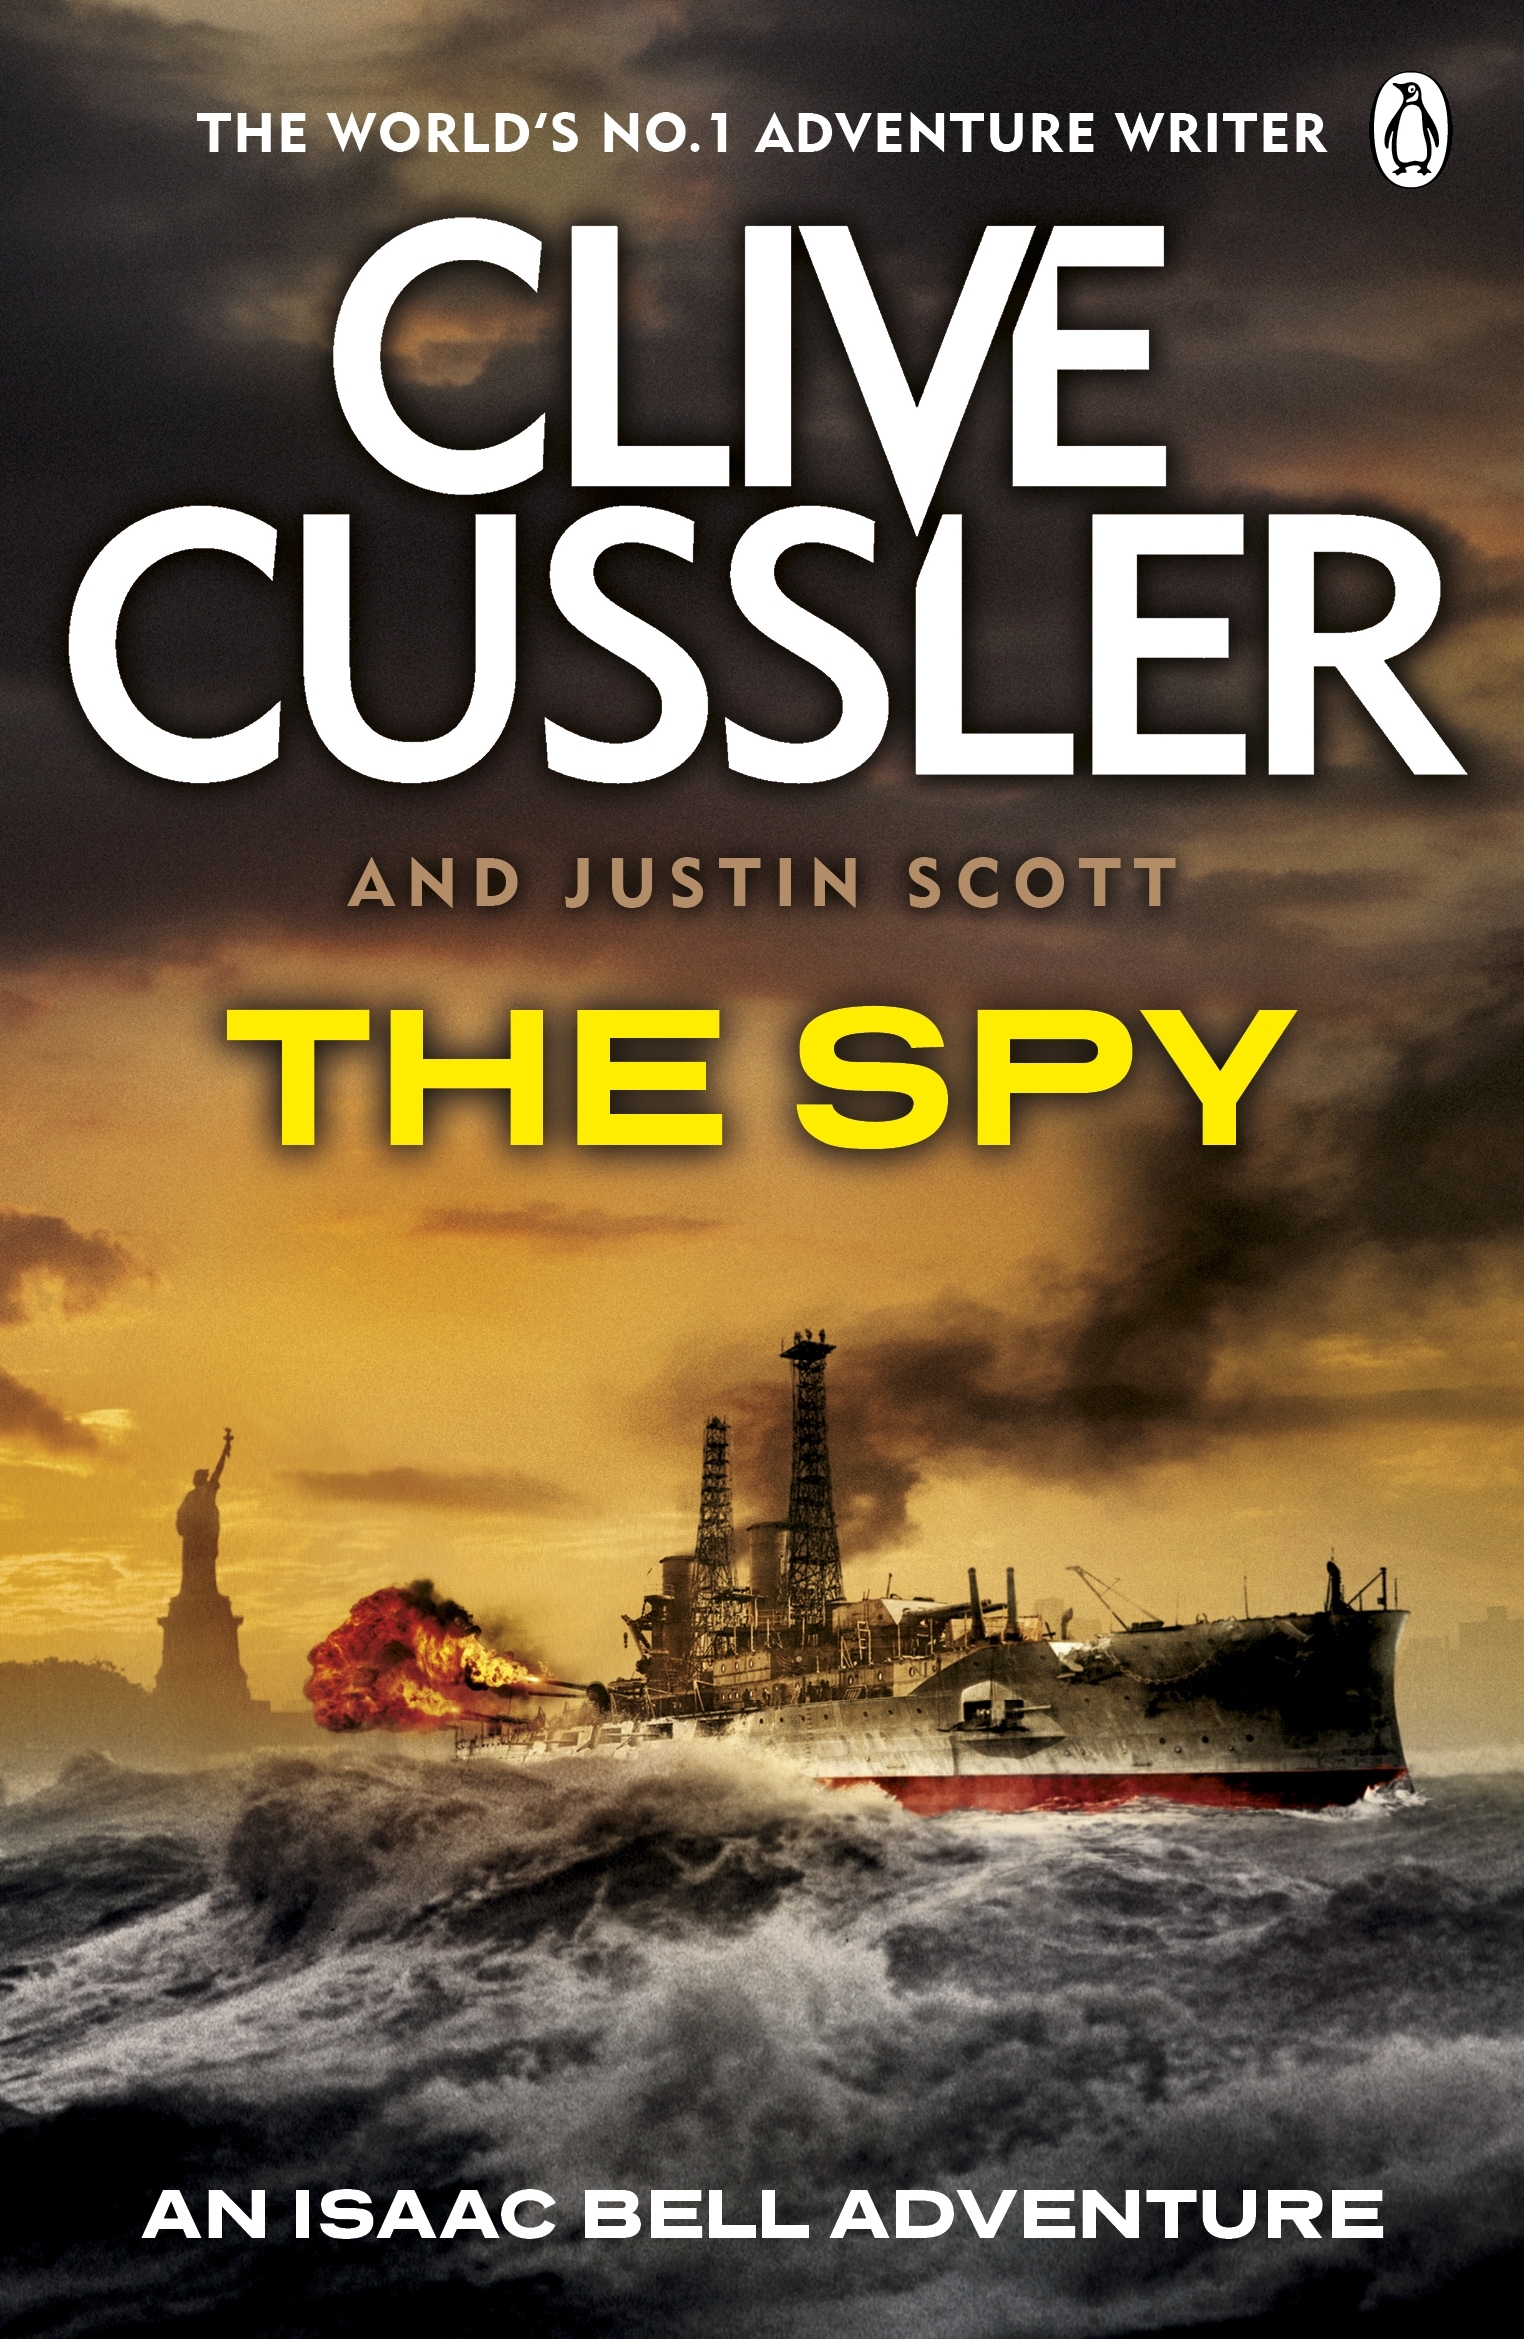 the-spy-by-clive-cussler-penguin-books-australia